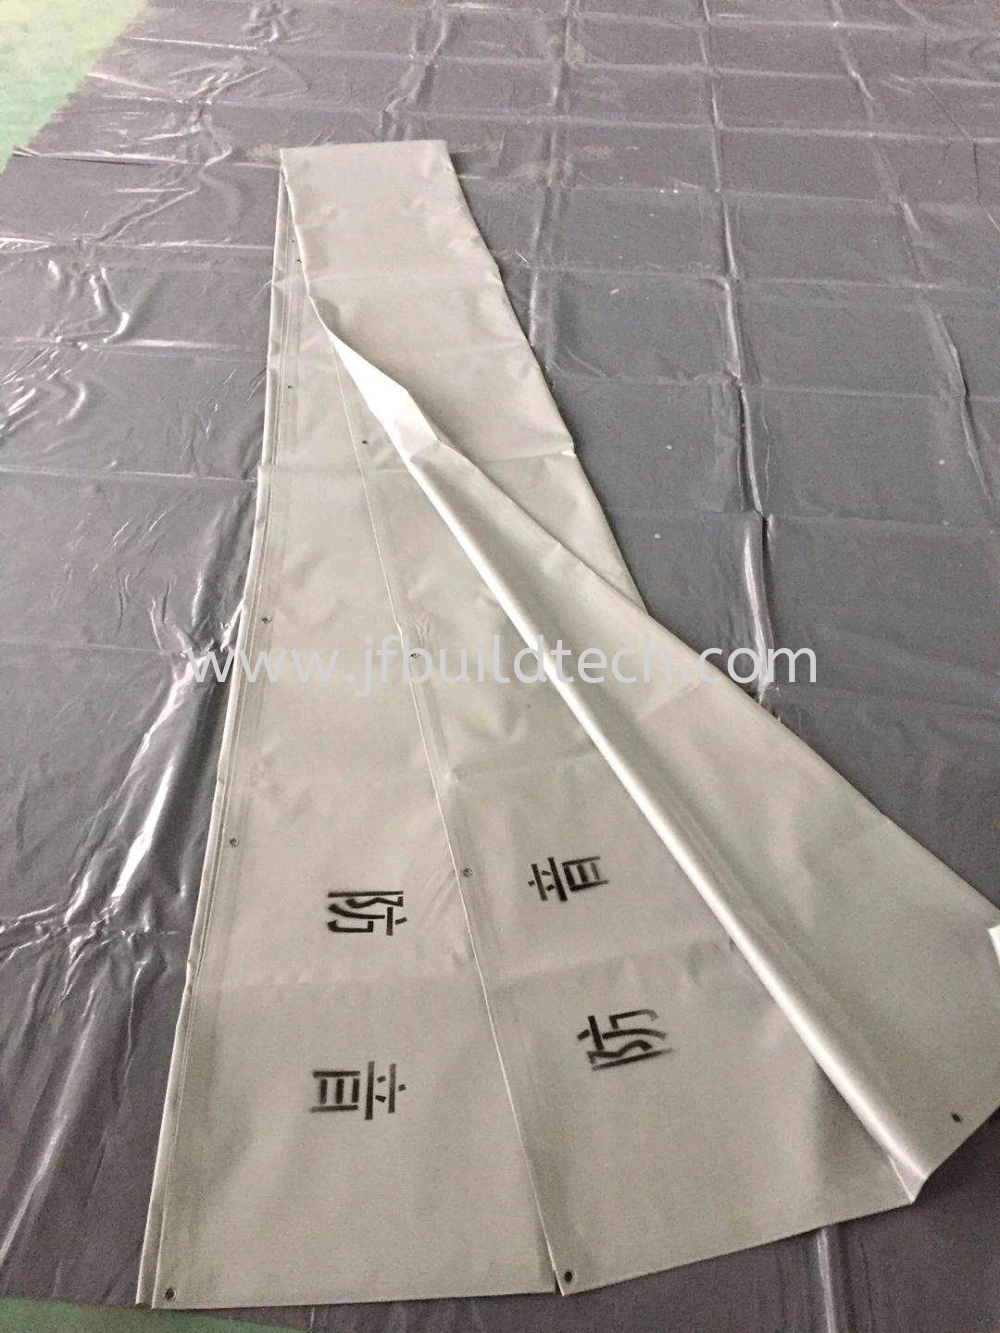 Sound insulation fabric